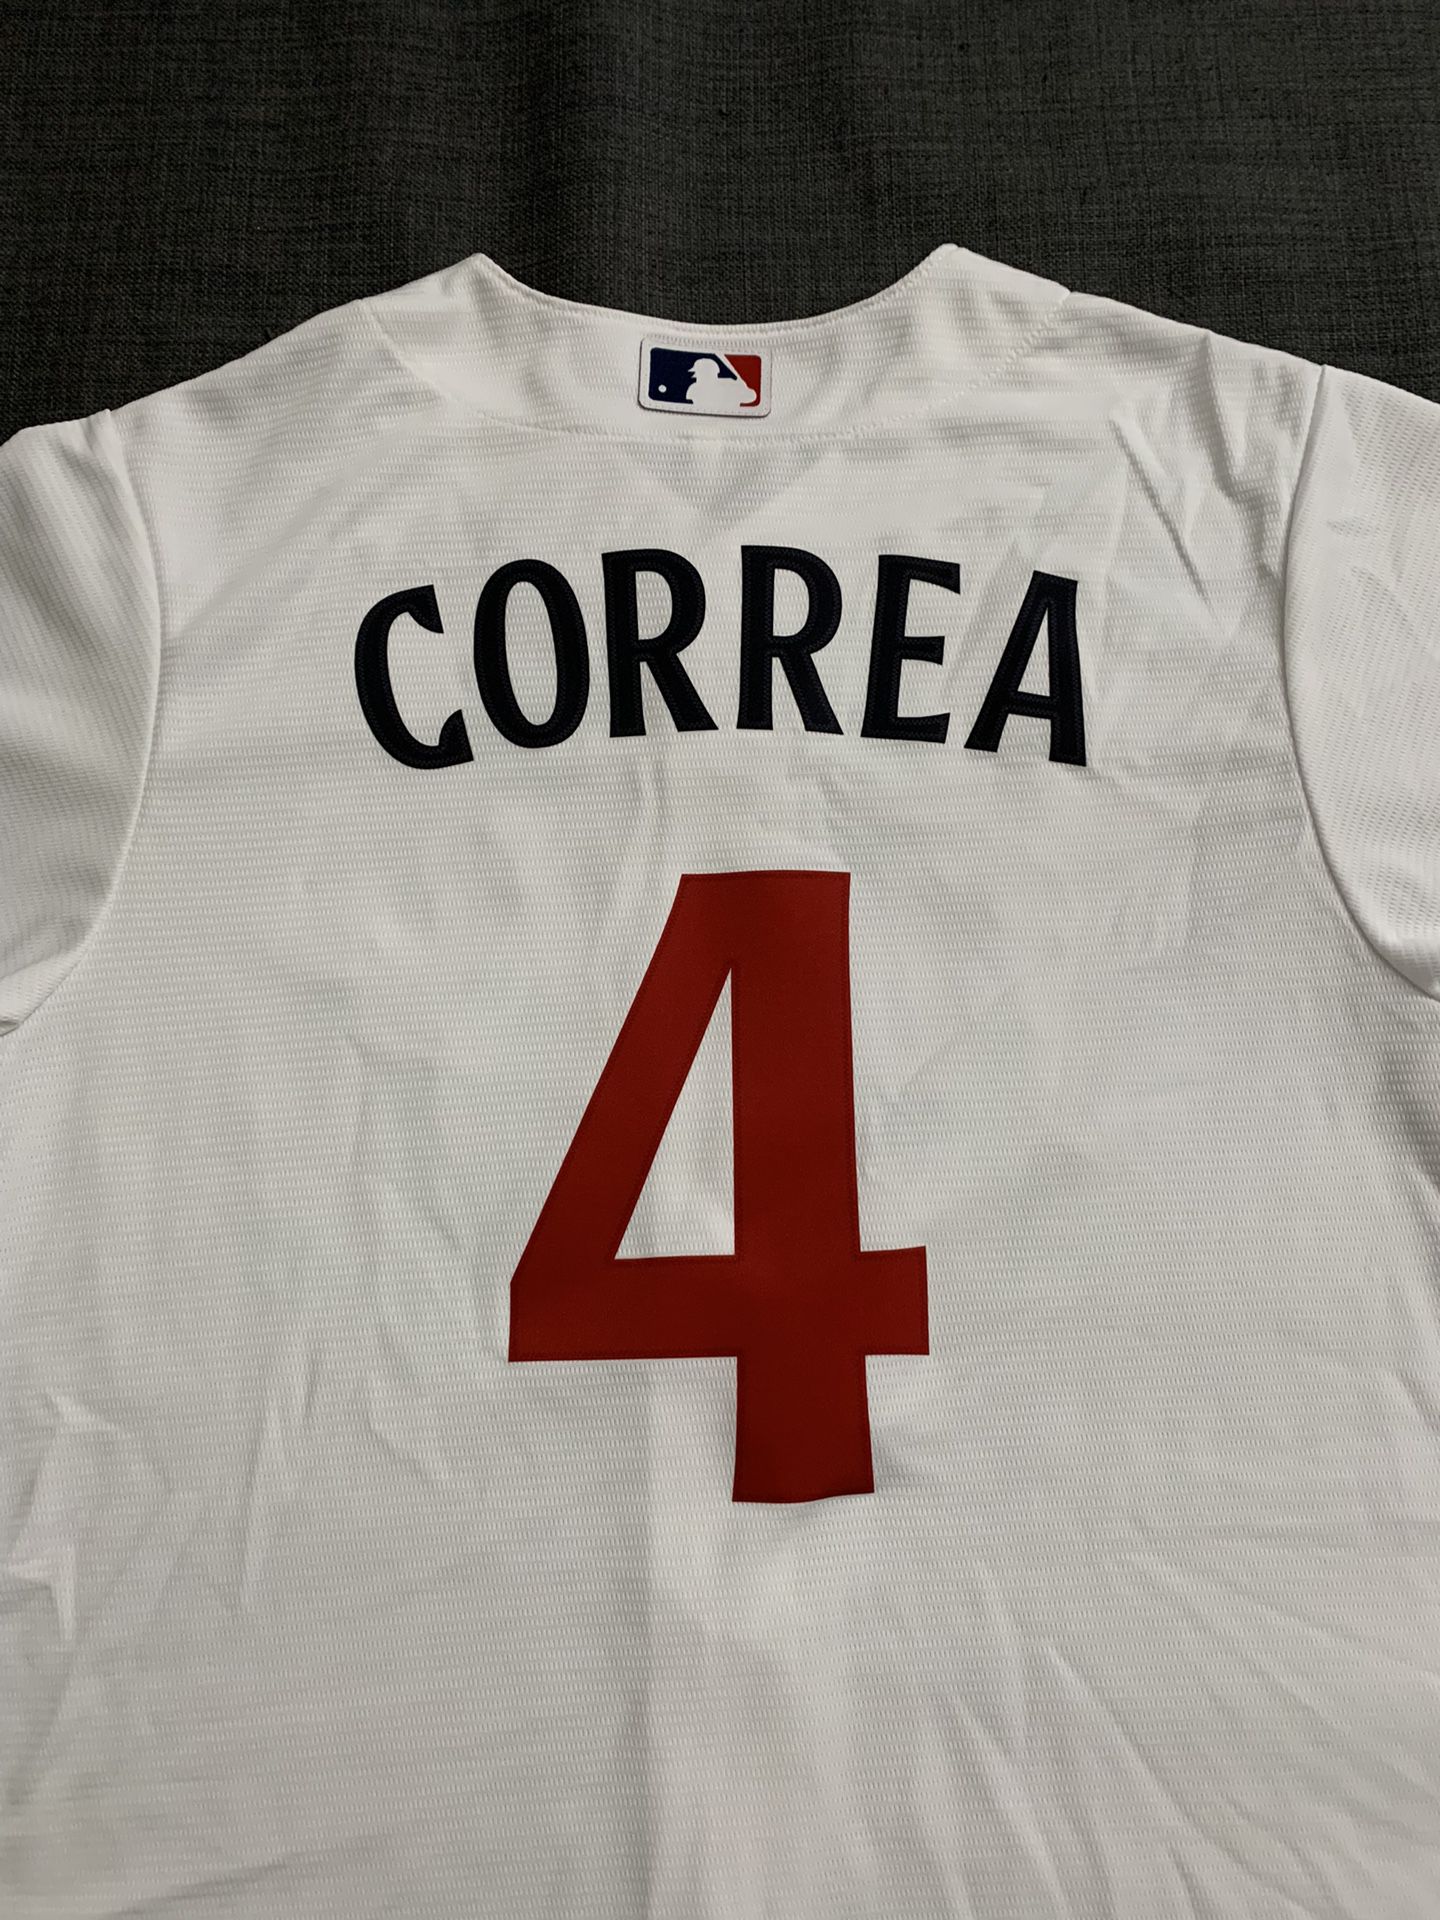 Official Carlos Correa Minnesota Twins Jerseys, Twins Carlos Correa  Baseball Jerseys, Uniforms